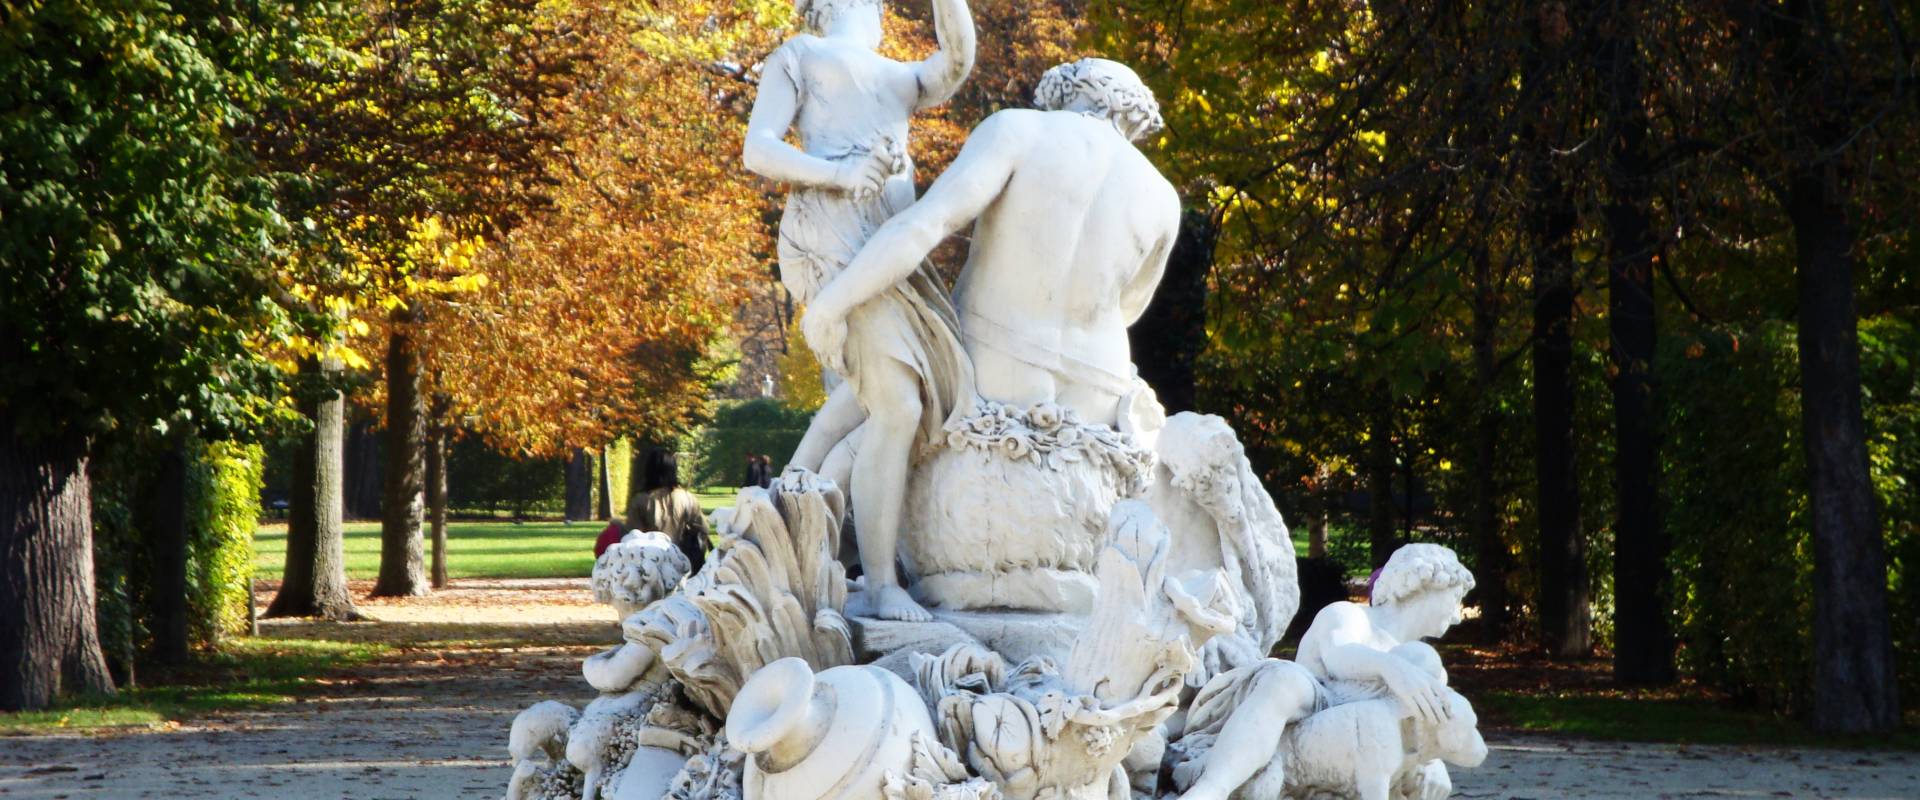 Statua parco ducale photo by Lataty74